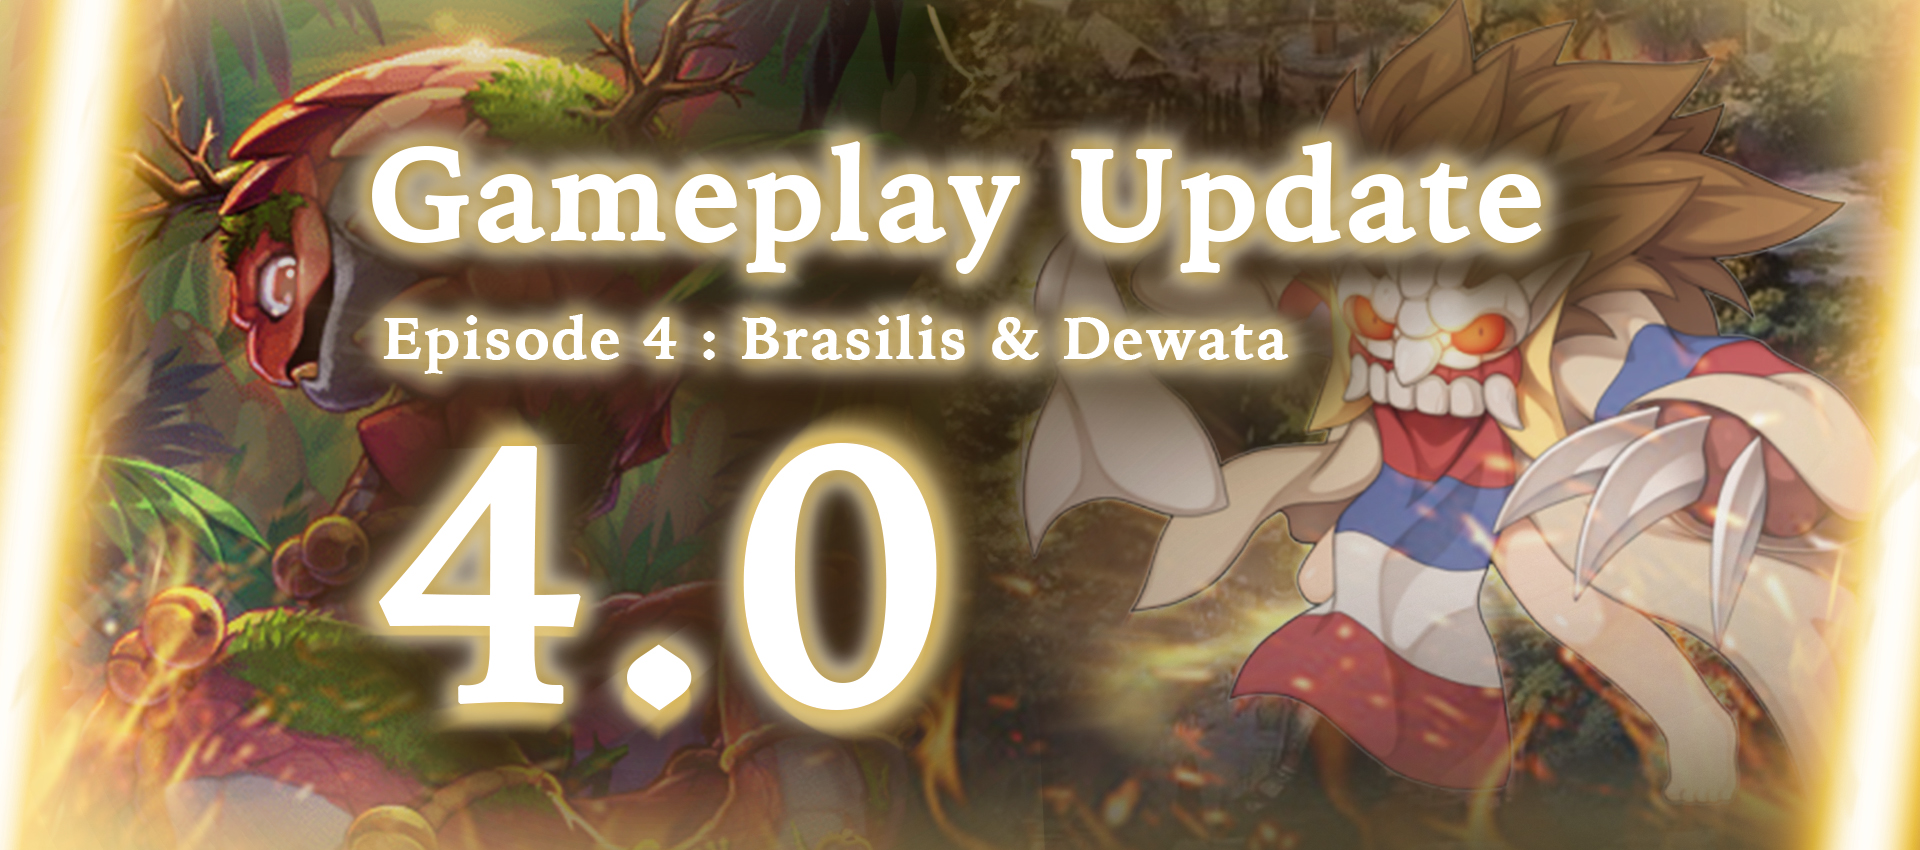 Gameplay Update 4.0 – Brasilis & Dewata